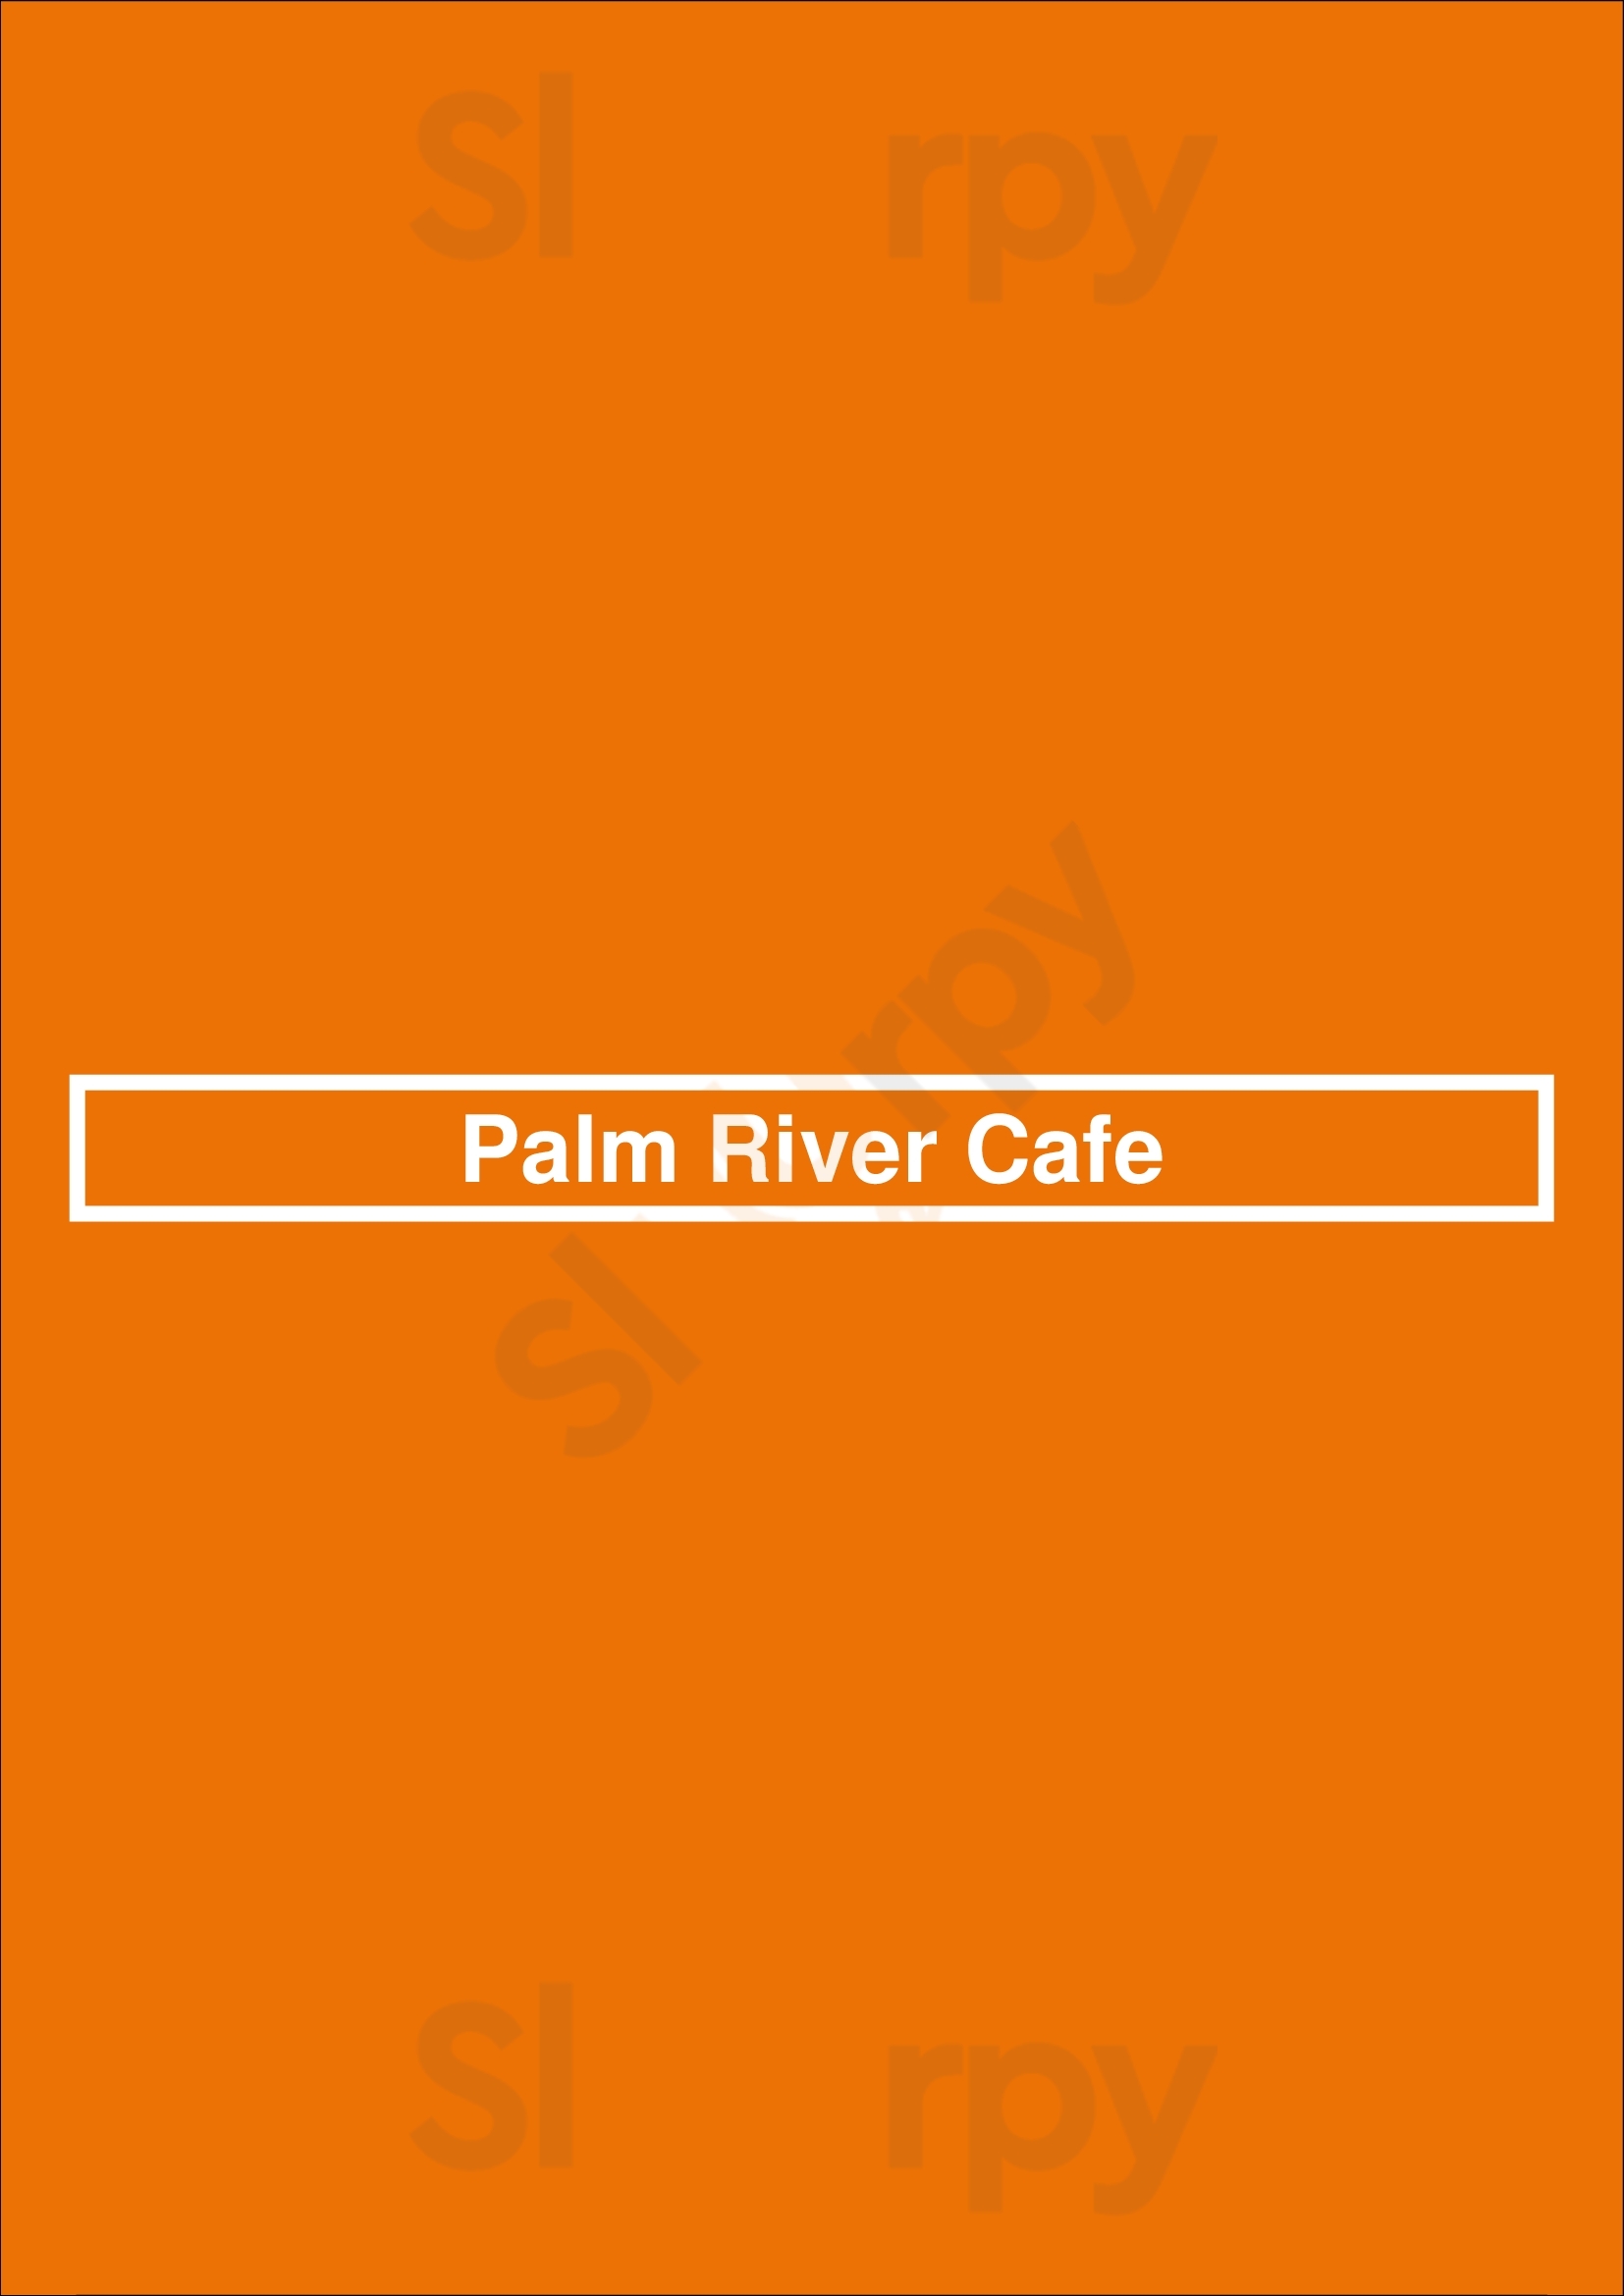 Palm River Cafe Tampa Menu - 1